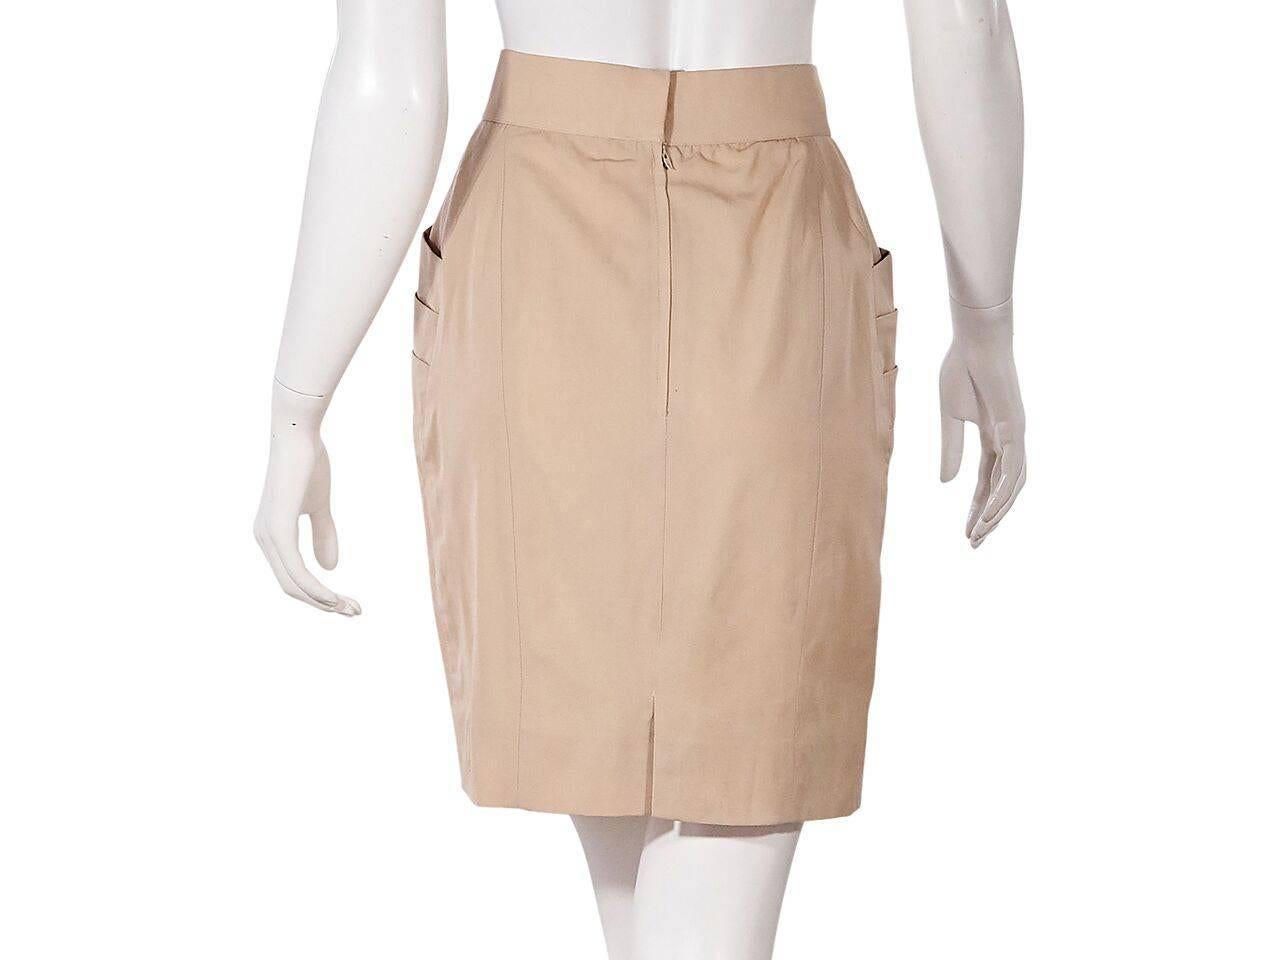 Product details:  Vintage tan pleated skirt by Chanel.  Banded waist.  Side slide pockets.  Concealed back zip closure.  Back center hem vent.  Label size FR 38. 
Condition: Pre-owned. Very good.
Est. Retail $ 1,298.00